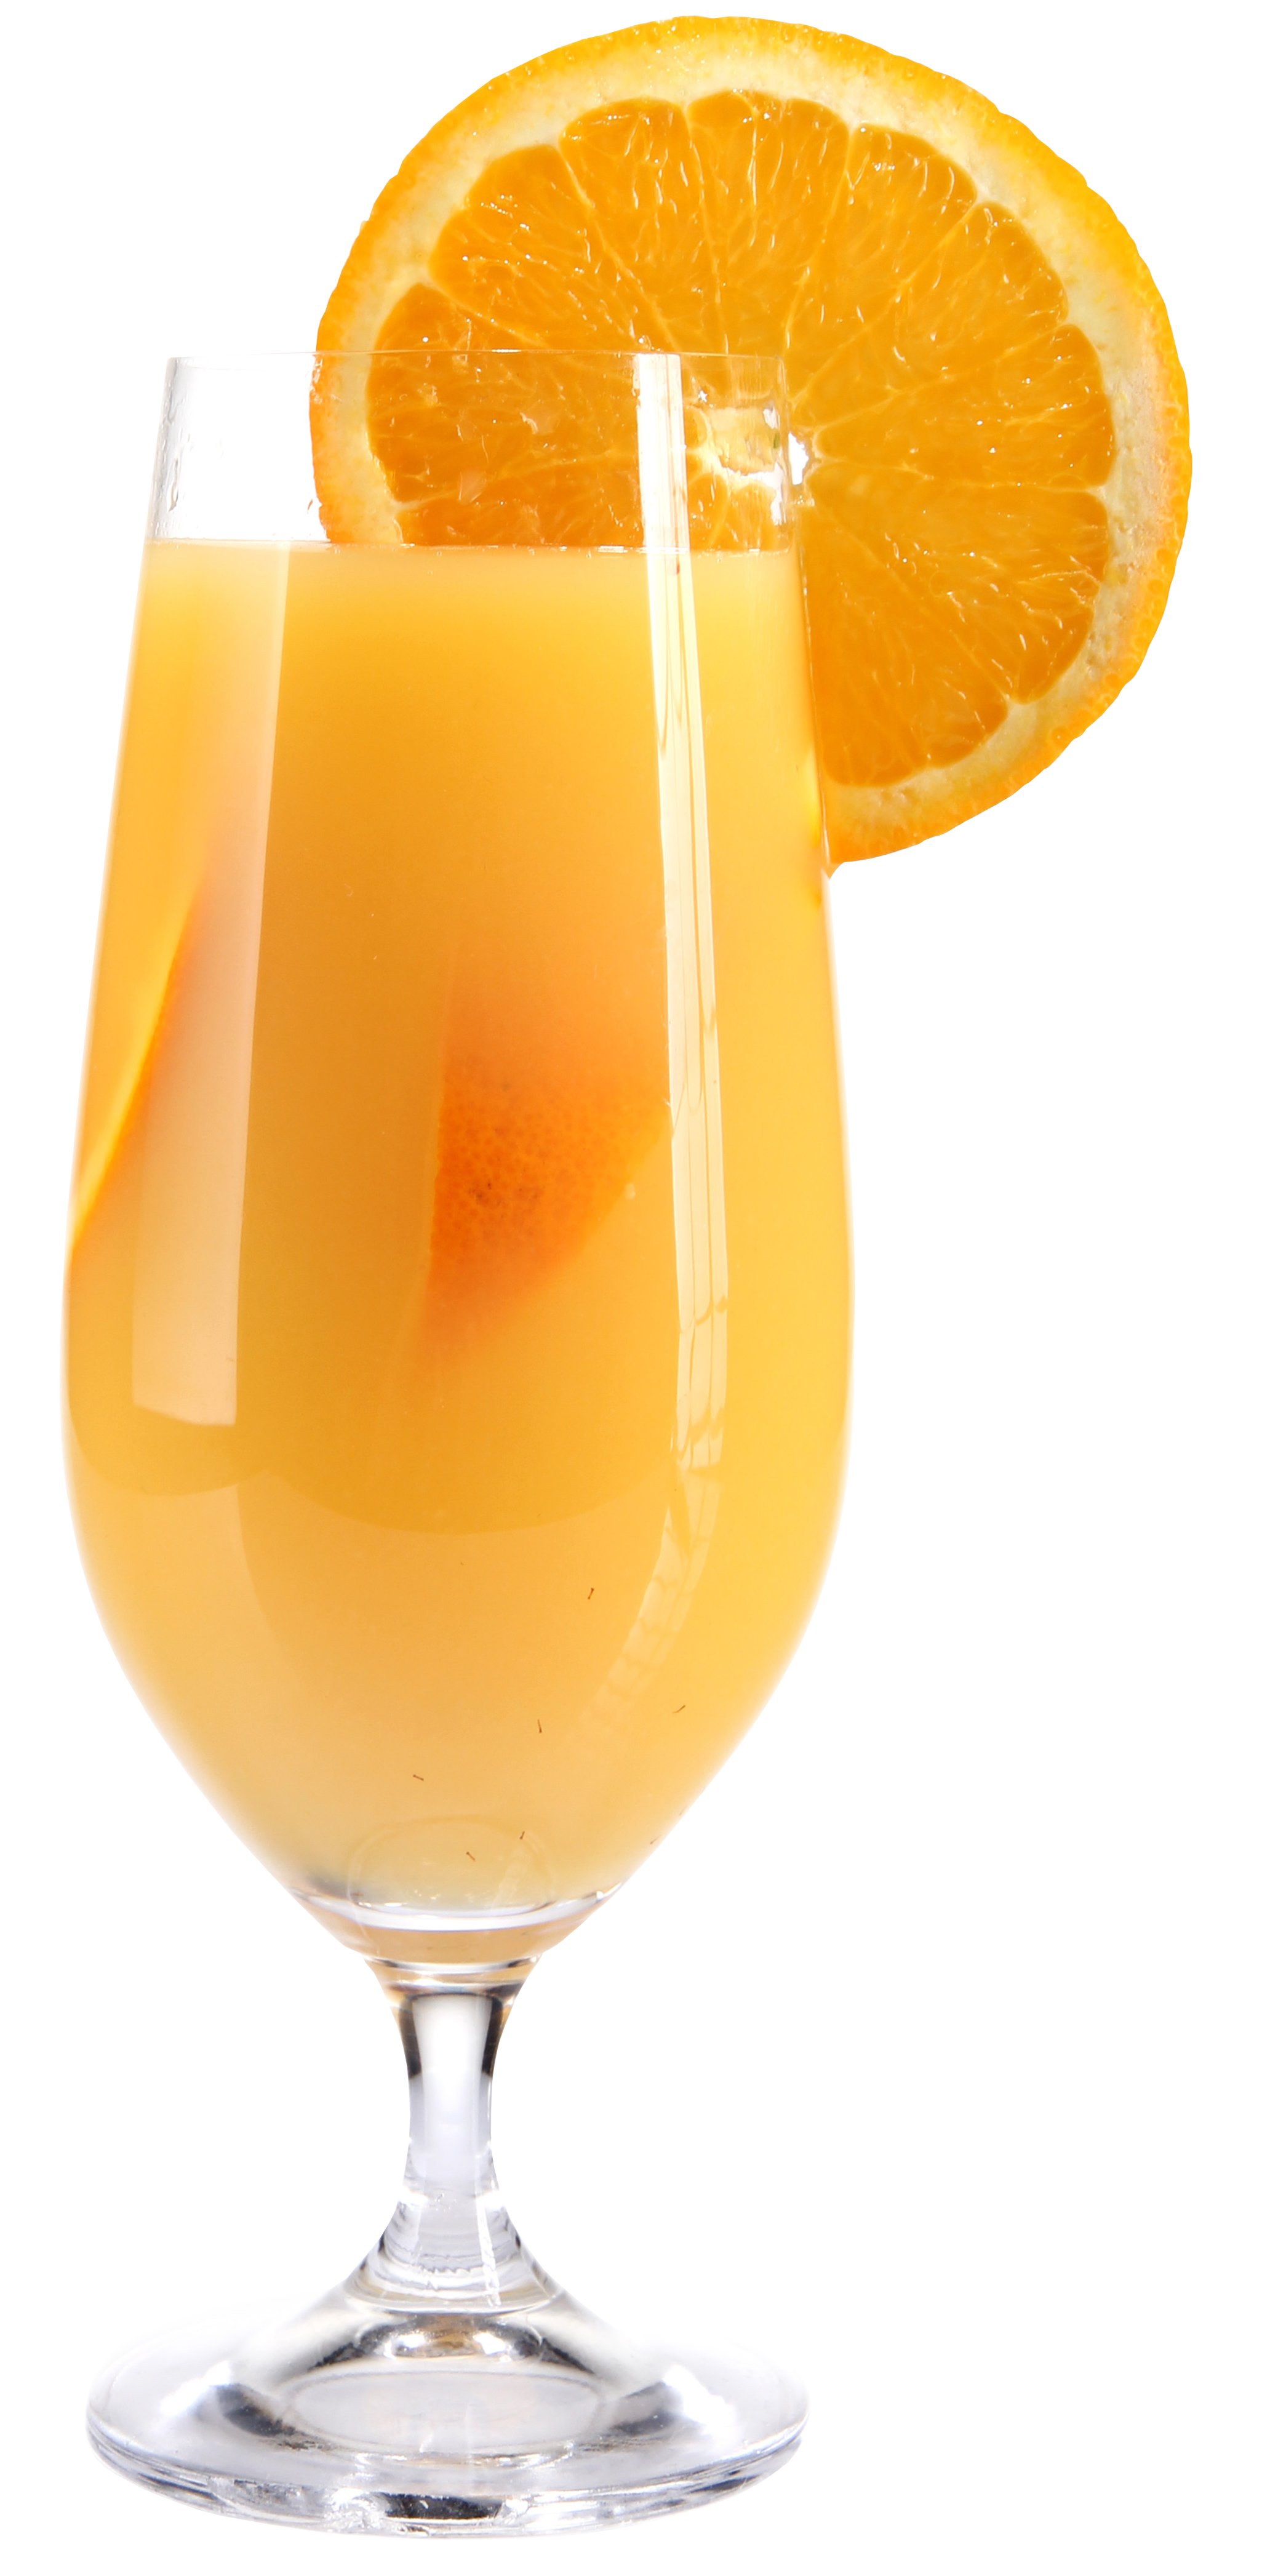 Download wallpaper orange juice photo wallpapers orange 2051x4186